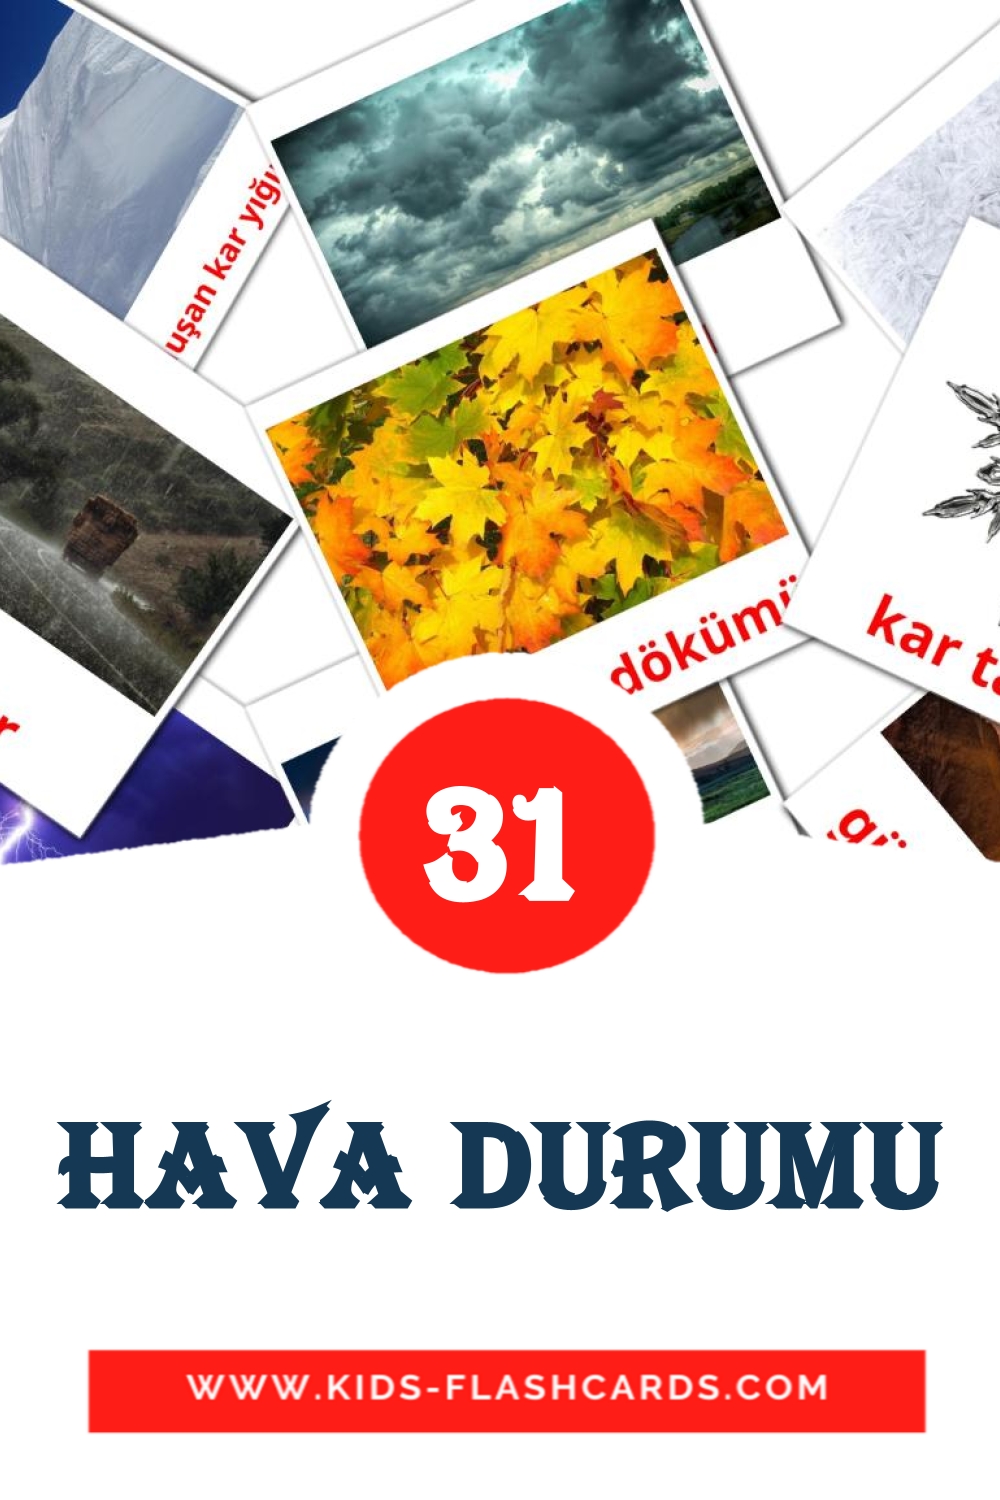 31 Hava Durumu Picture Cards for Kindergarden in turkish